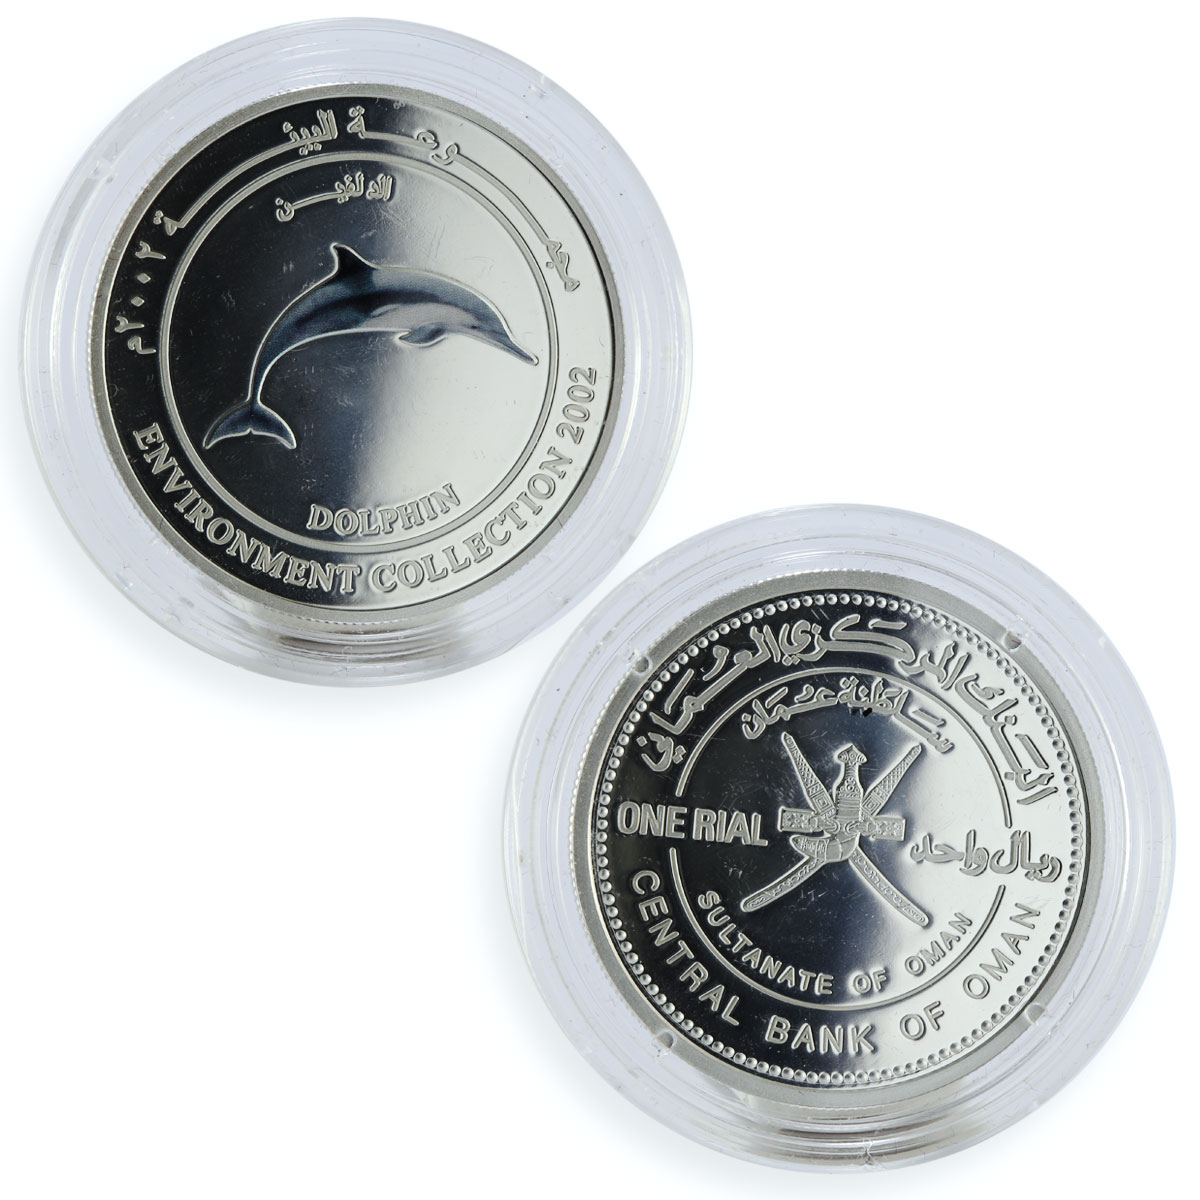 Oman 1 riyal set of 6 coins Year of environment coloured silver proof 2002